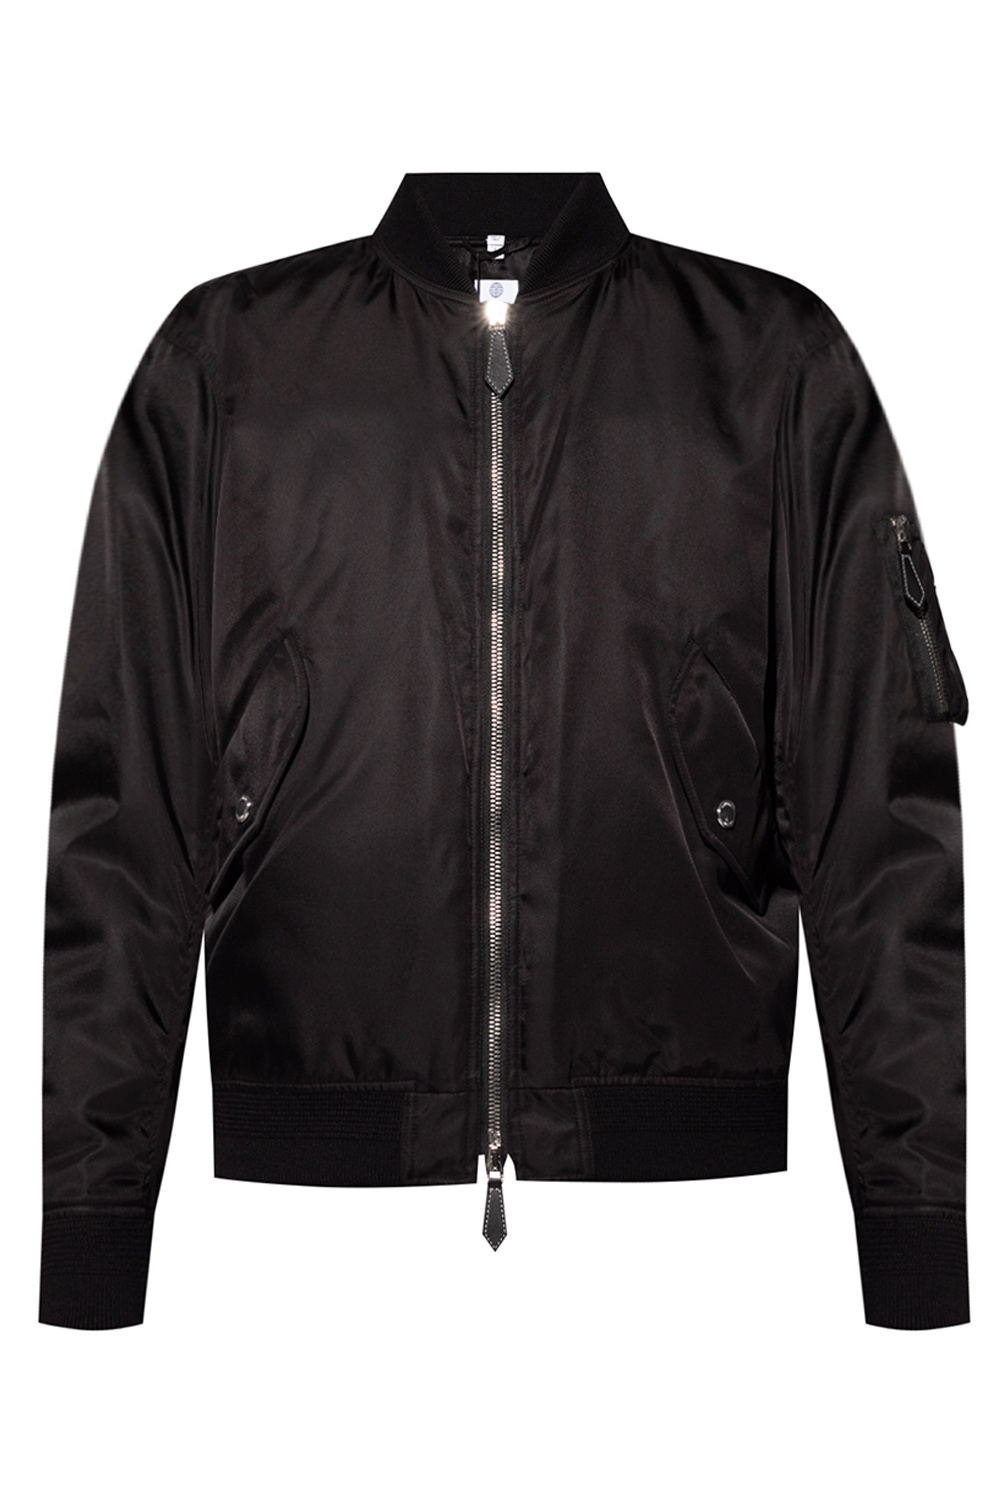 Burberry Bomber jacket | Men's Clothing | Vitkac